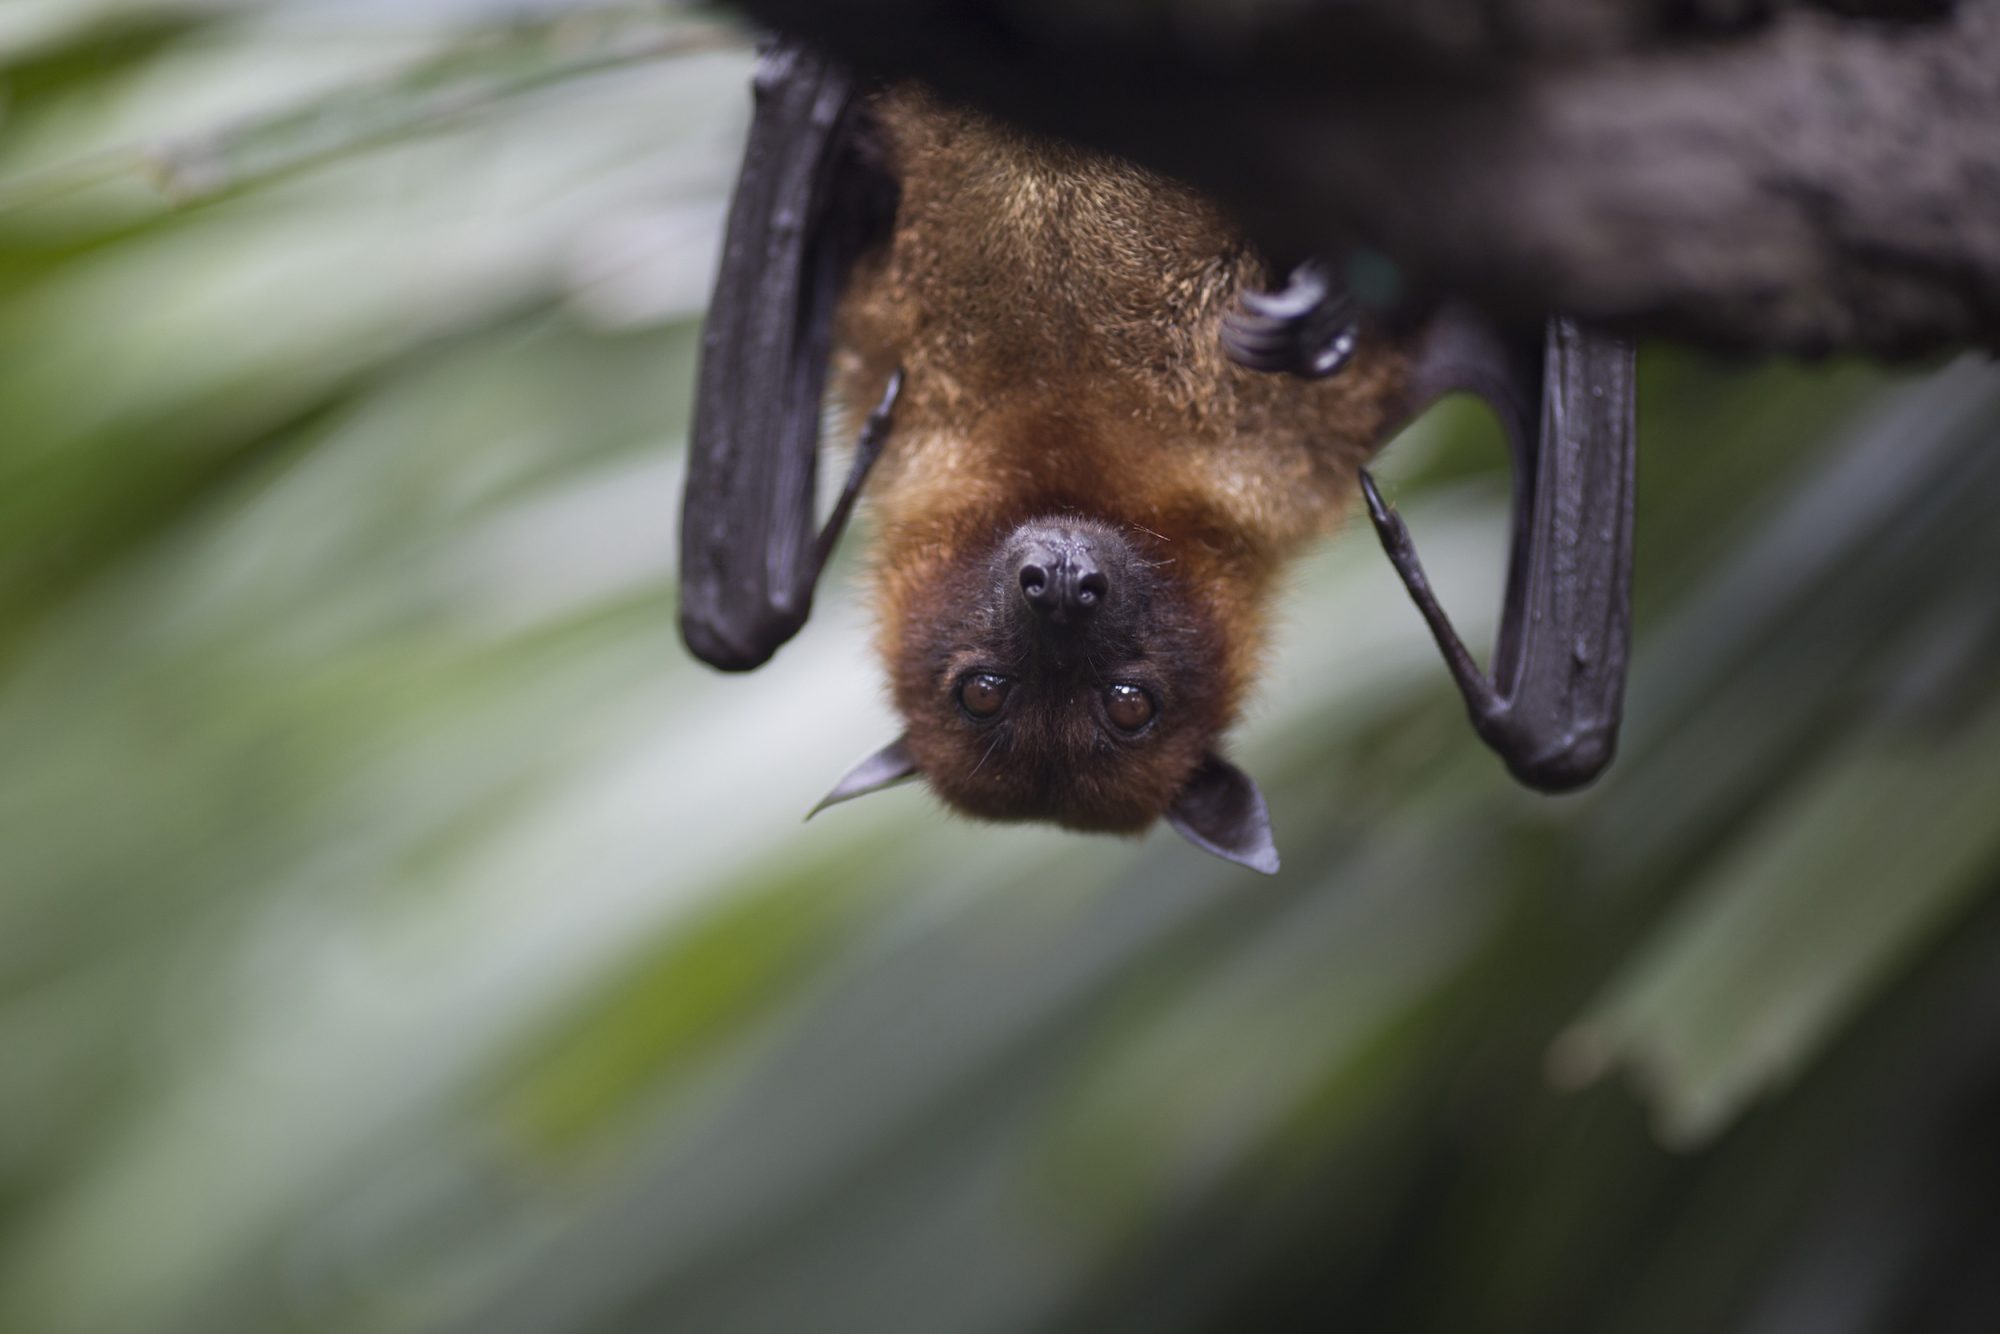 China warns of bats carrying new types of coronavirus